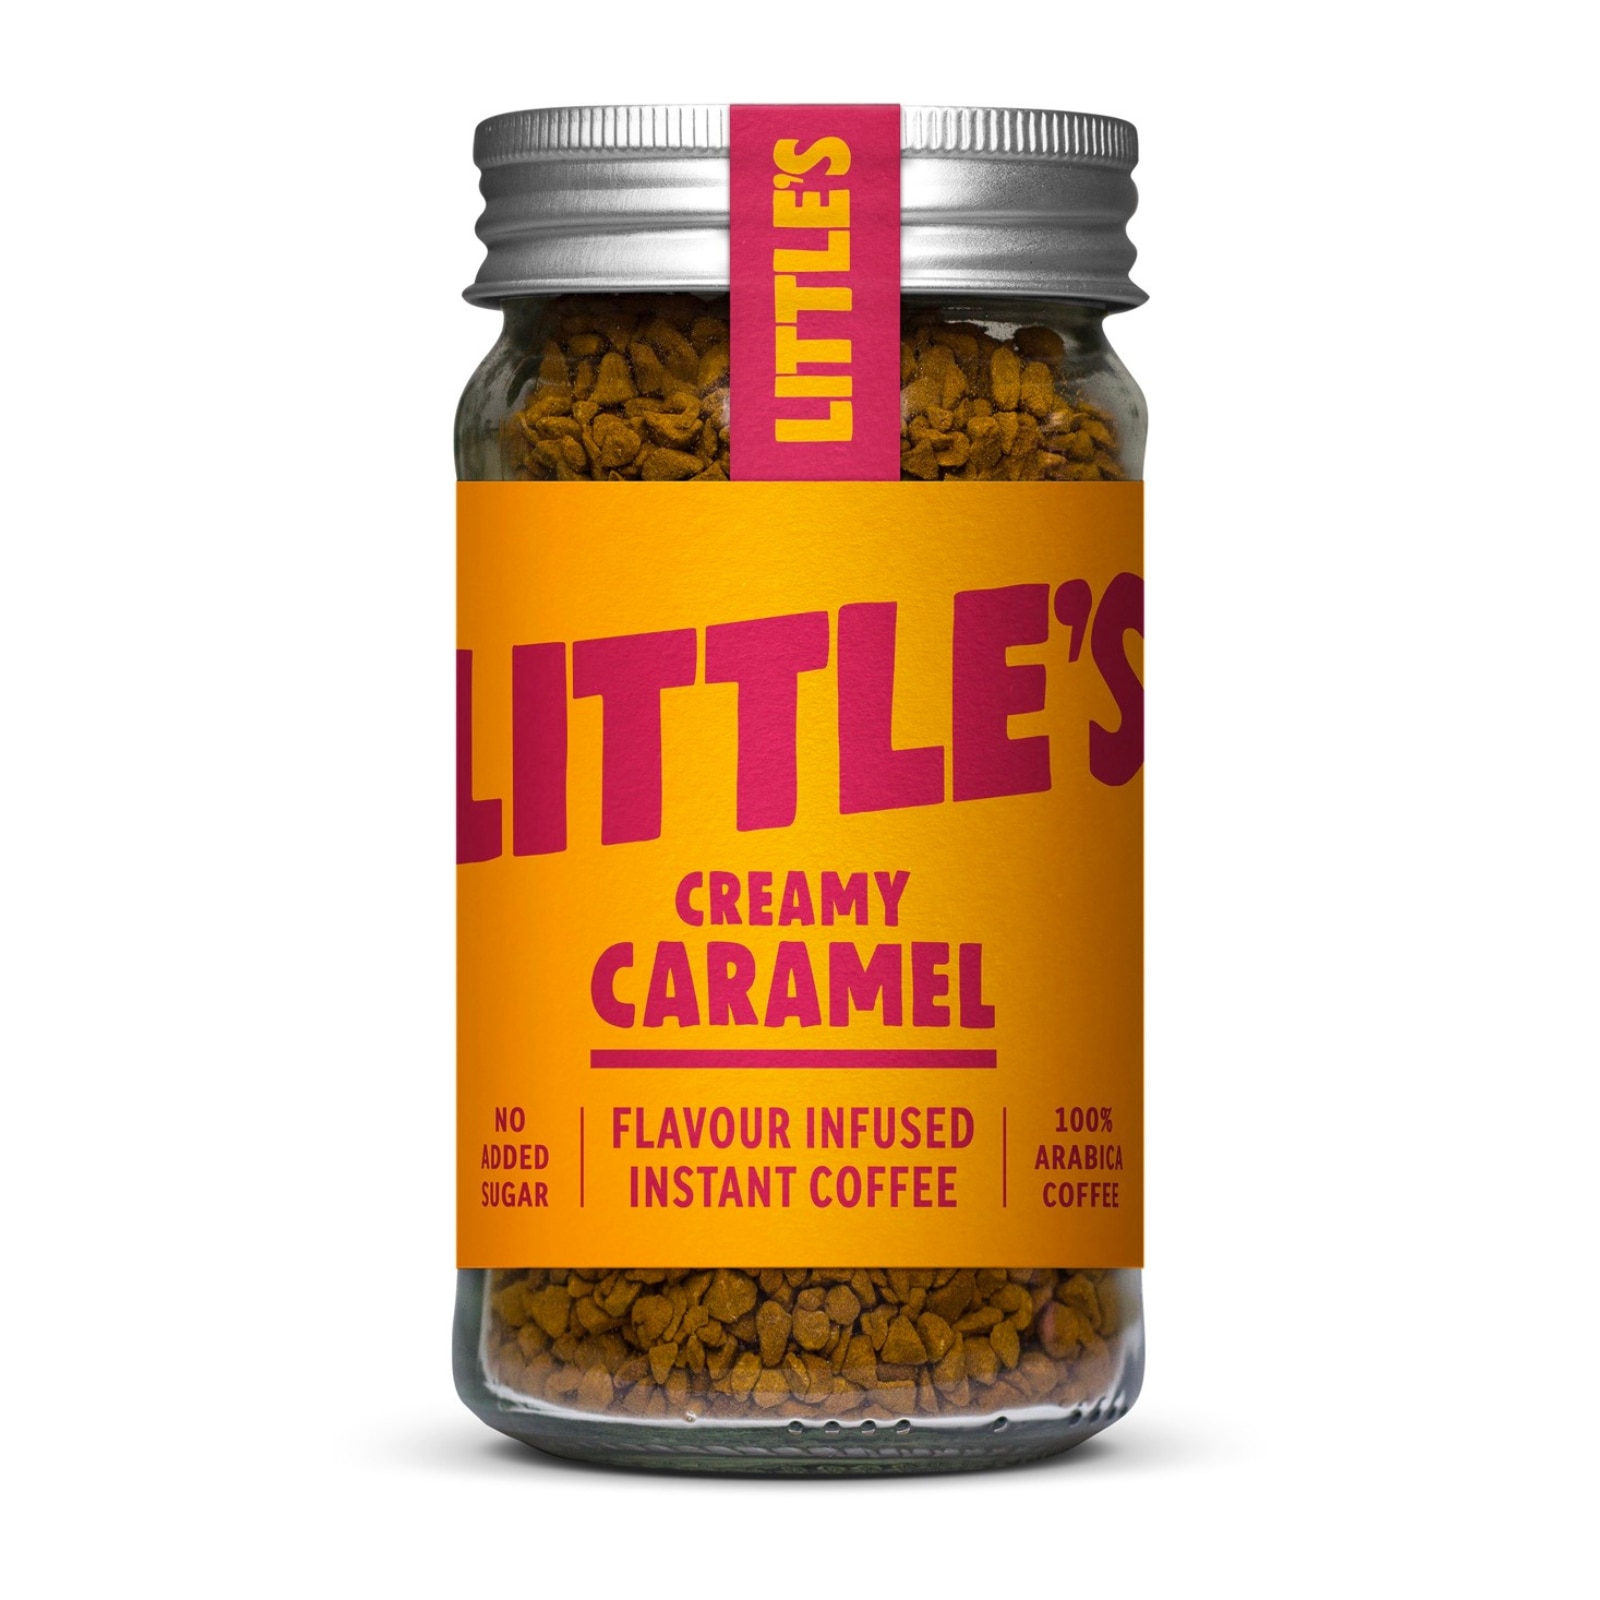 Little's Creamy Caramel Instant Coffee